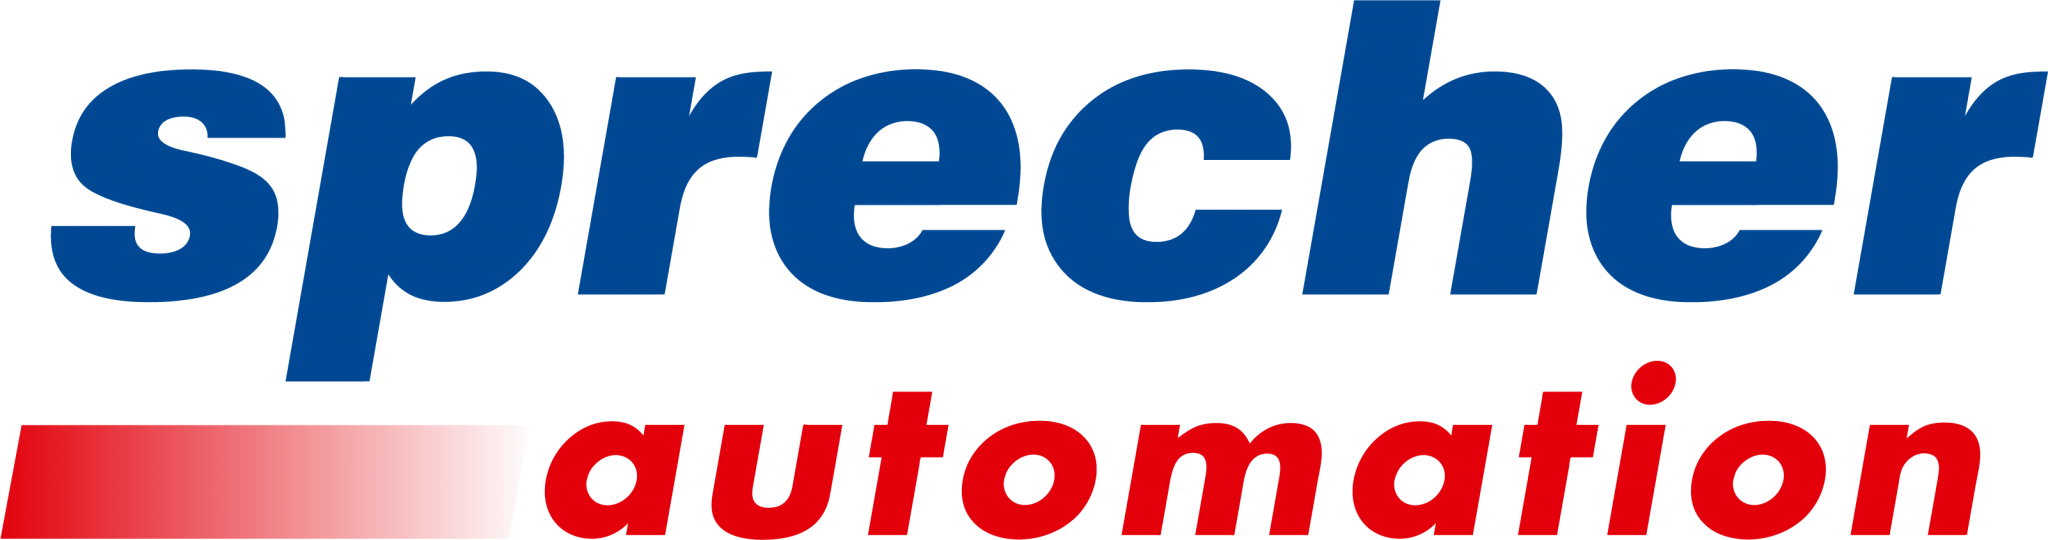 Sprecher Automation logo